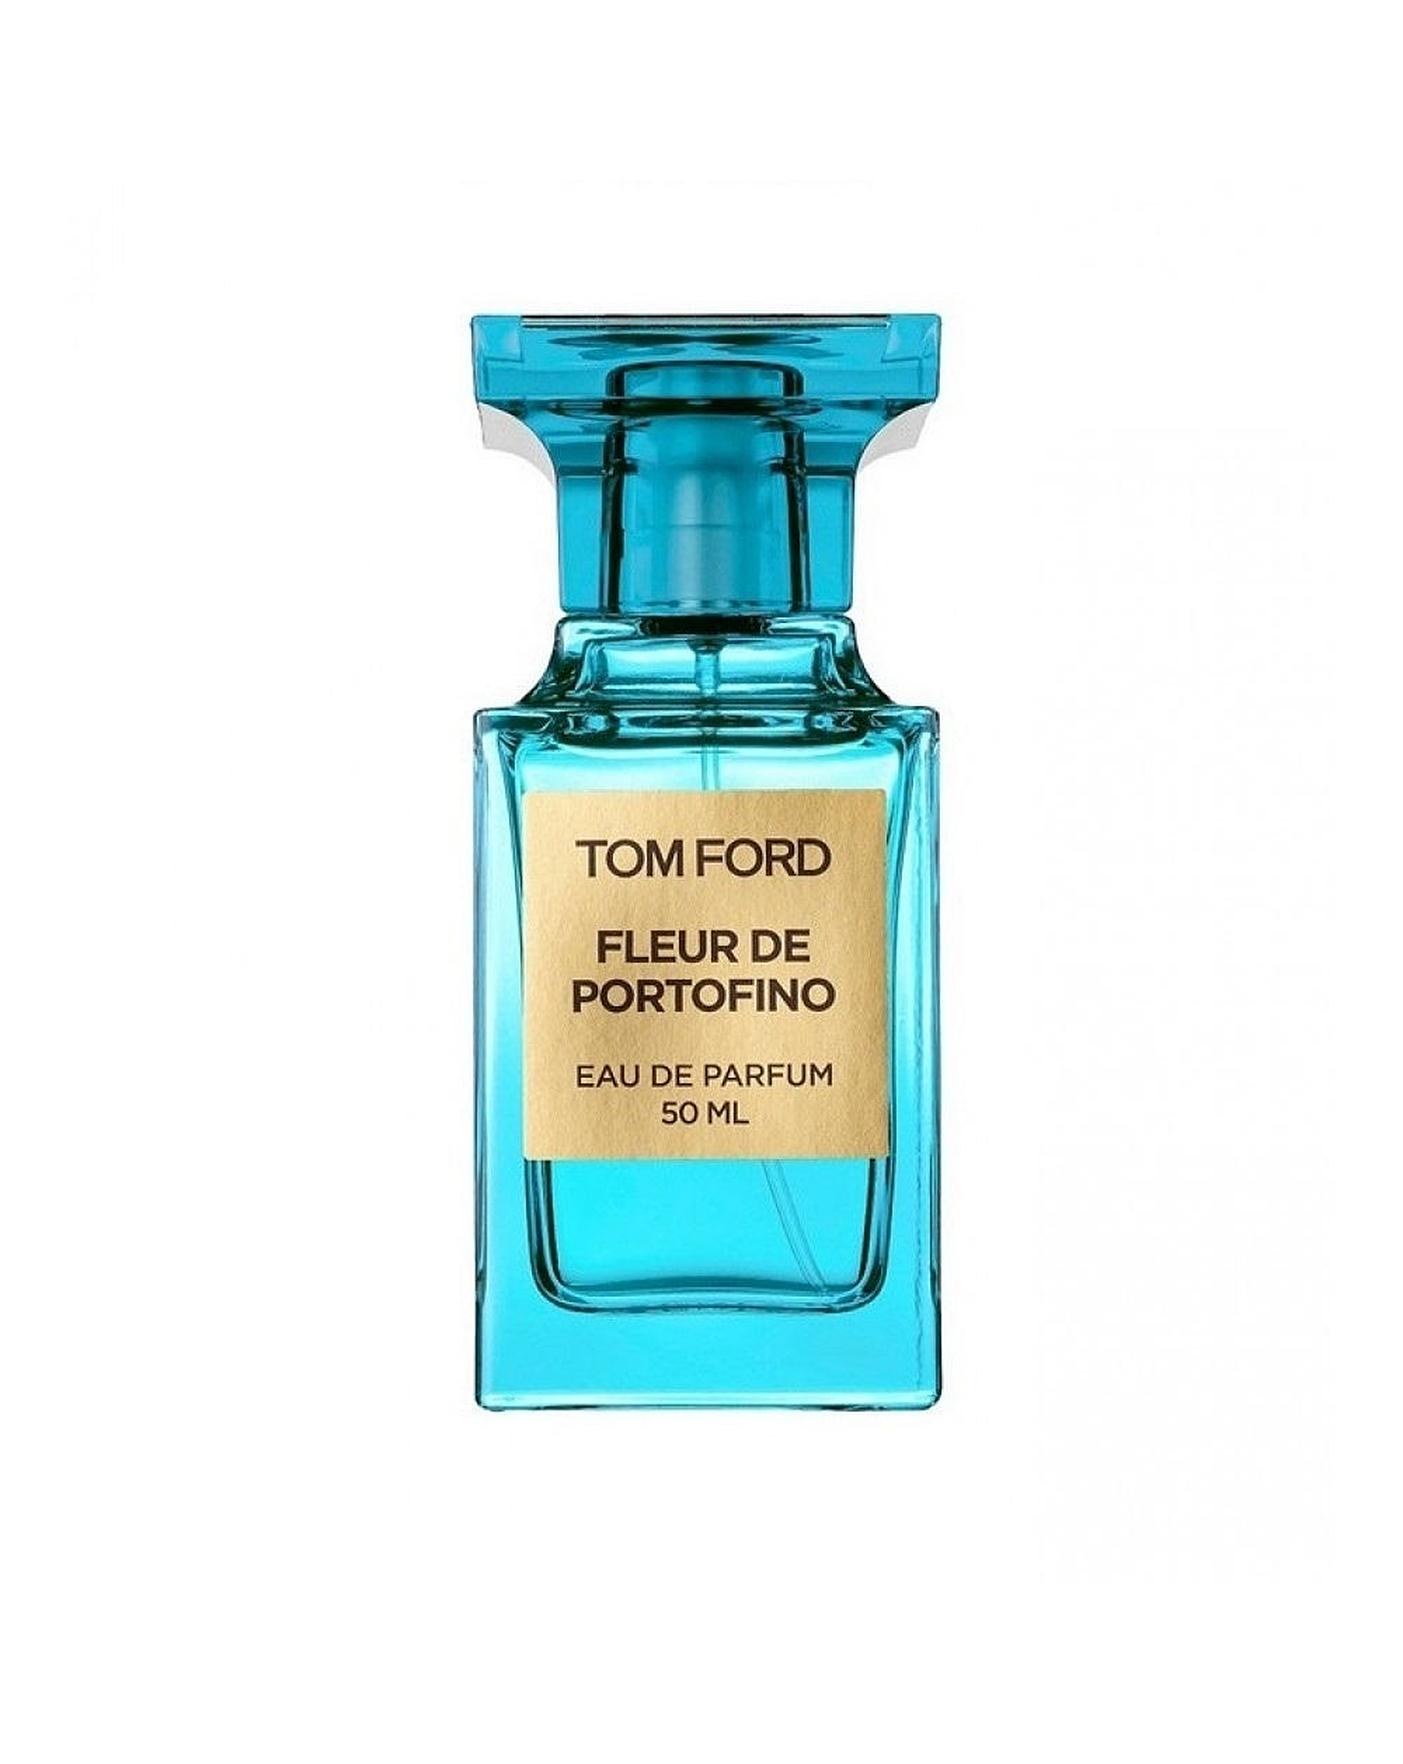 Tom Ford Fleur De Portofino 50ml EDP | J D Williams